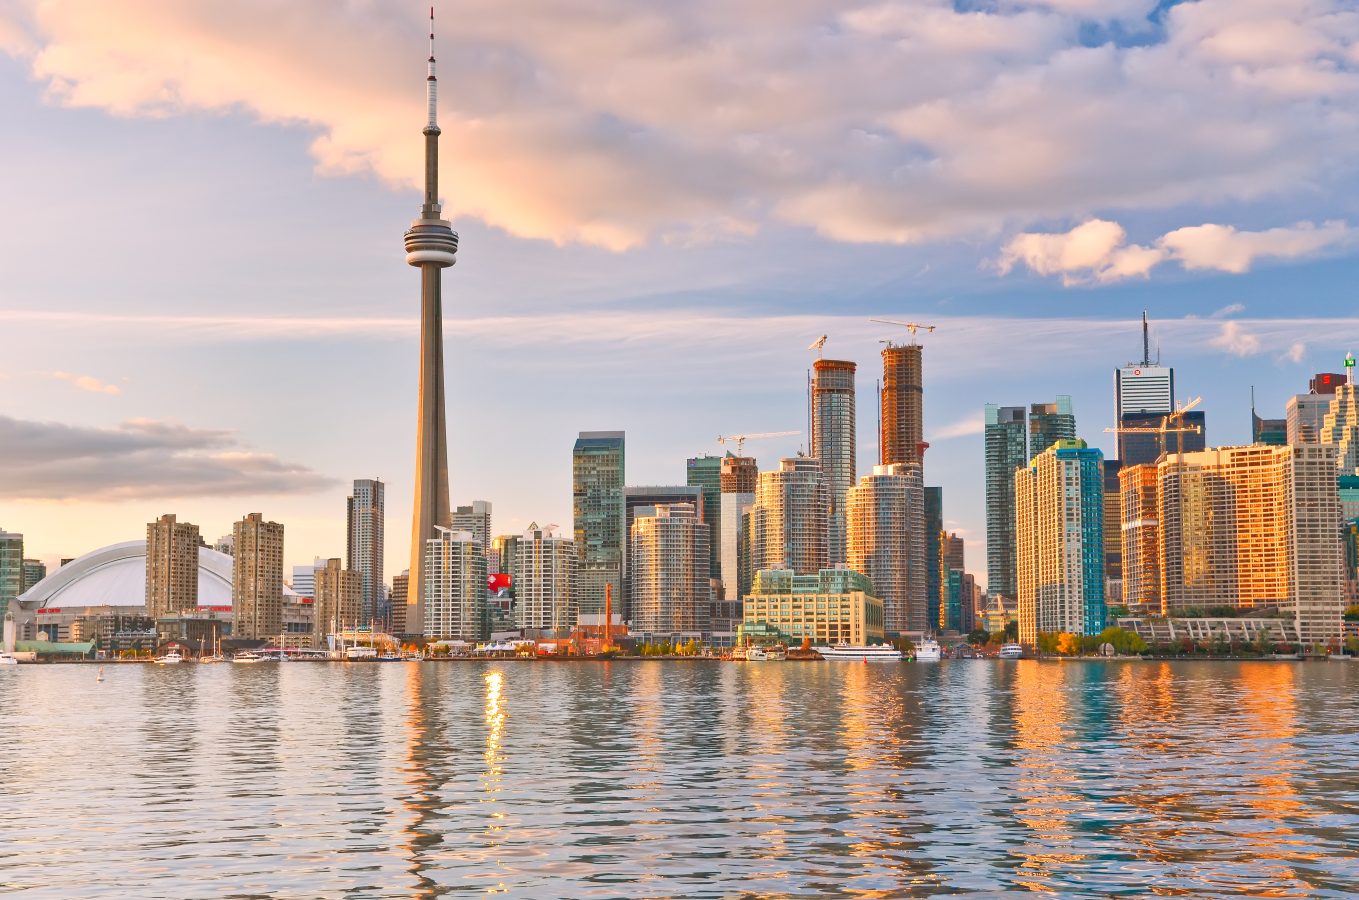 Toronto skyline from the waters of Lake Ontario.